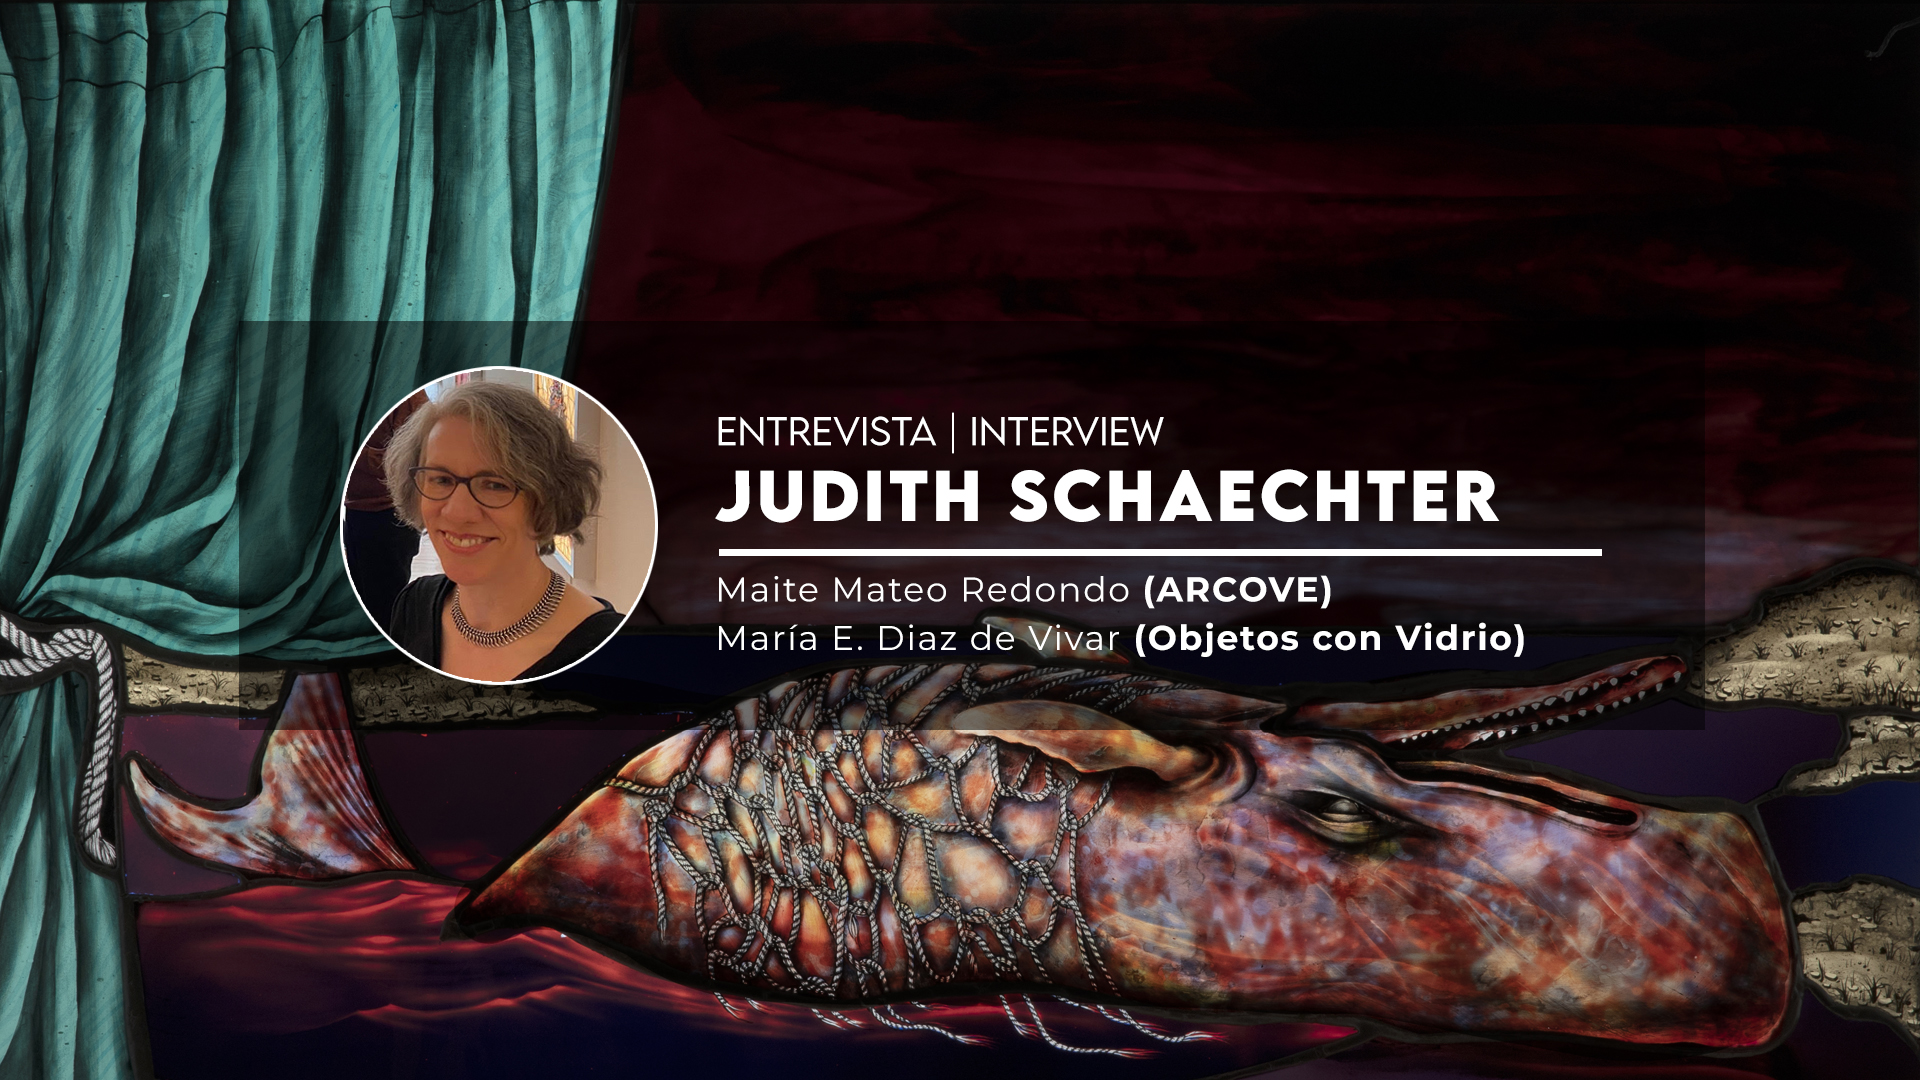 Entrevista a Judith Schaechter 2022 Año Internacional del Vidrio ARCOVE - Objetos con Vidrio